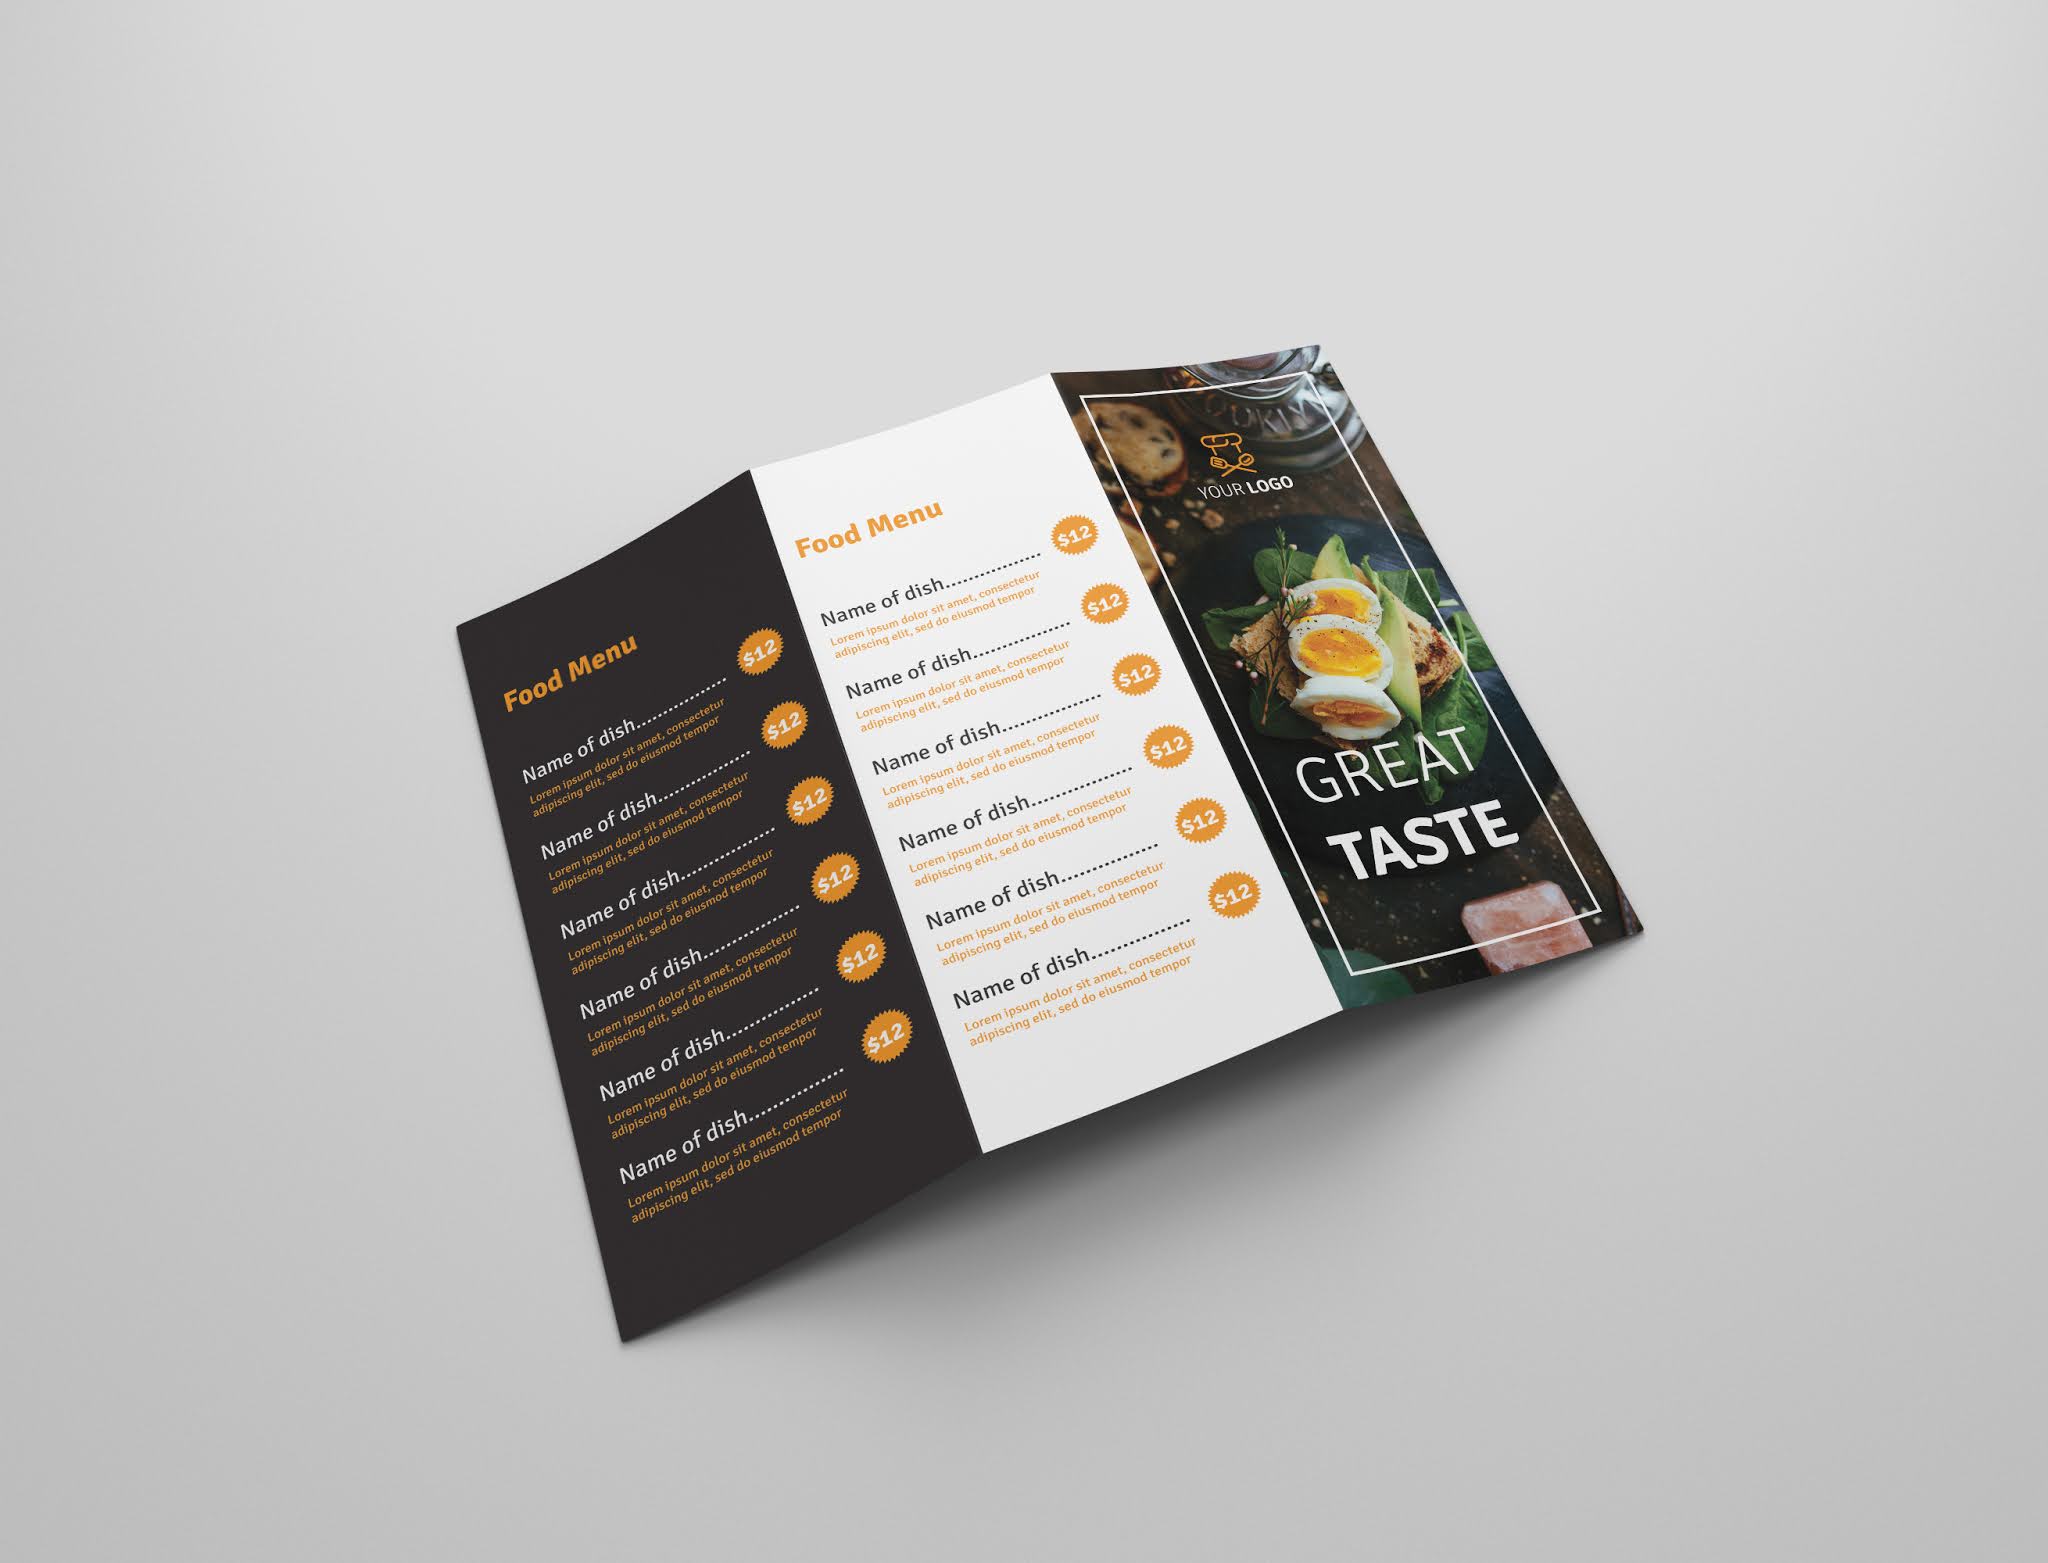 Download free food brochure psd, free food menu psd, free download 1